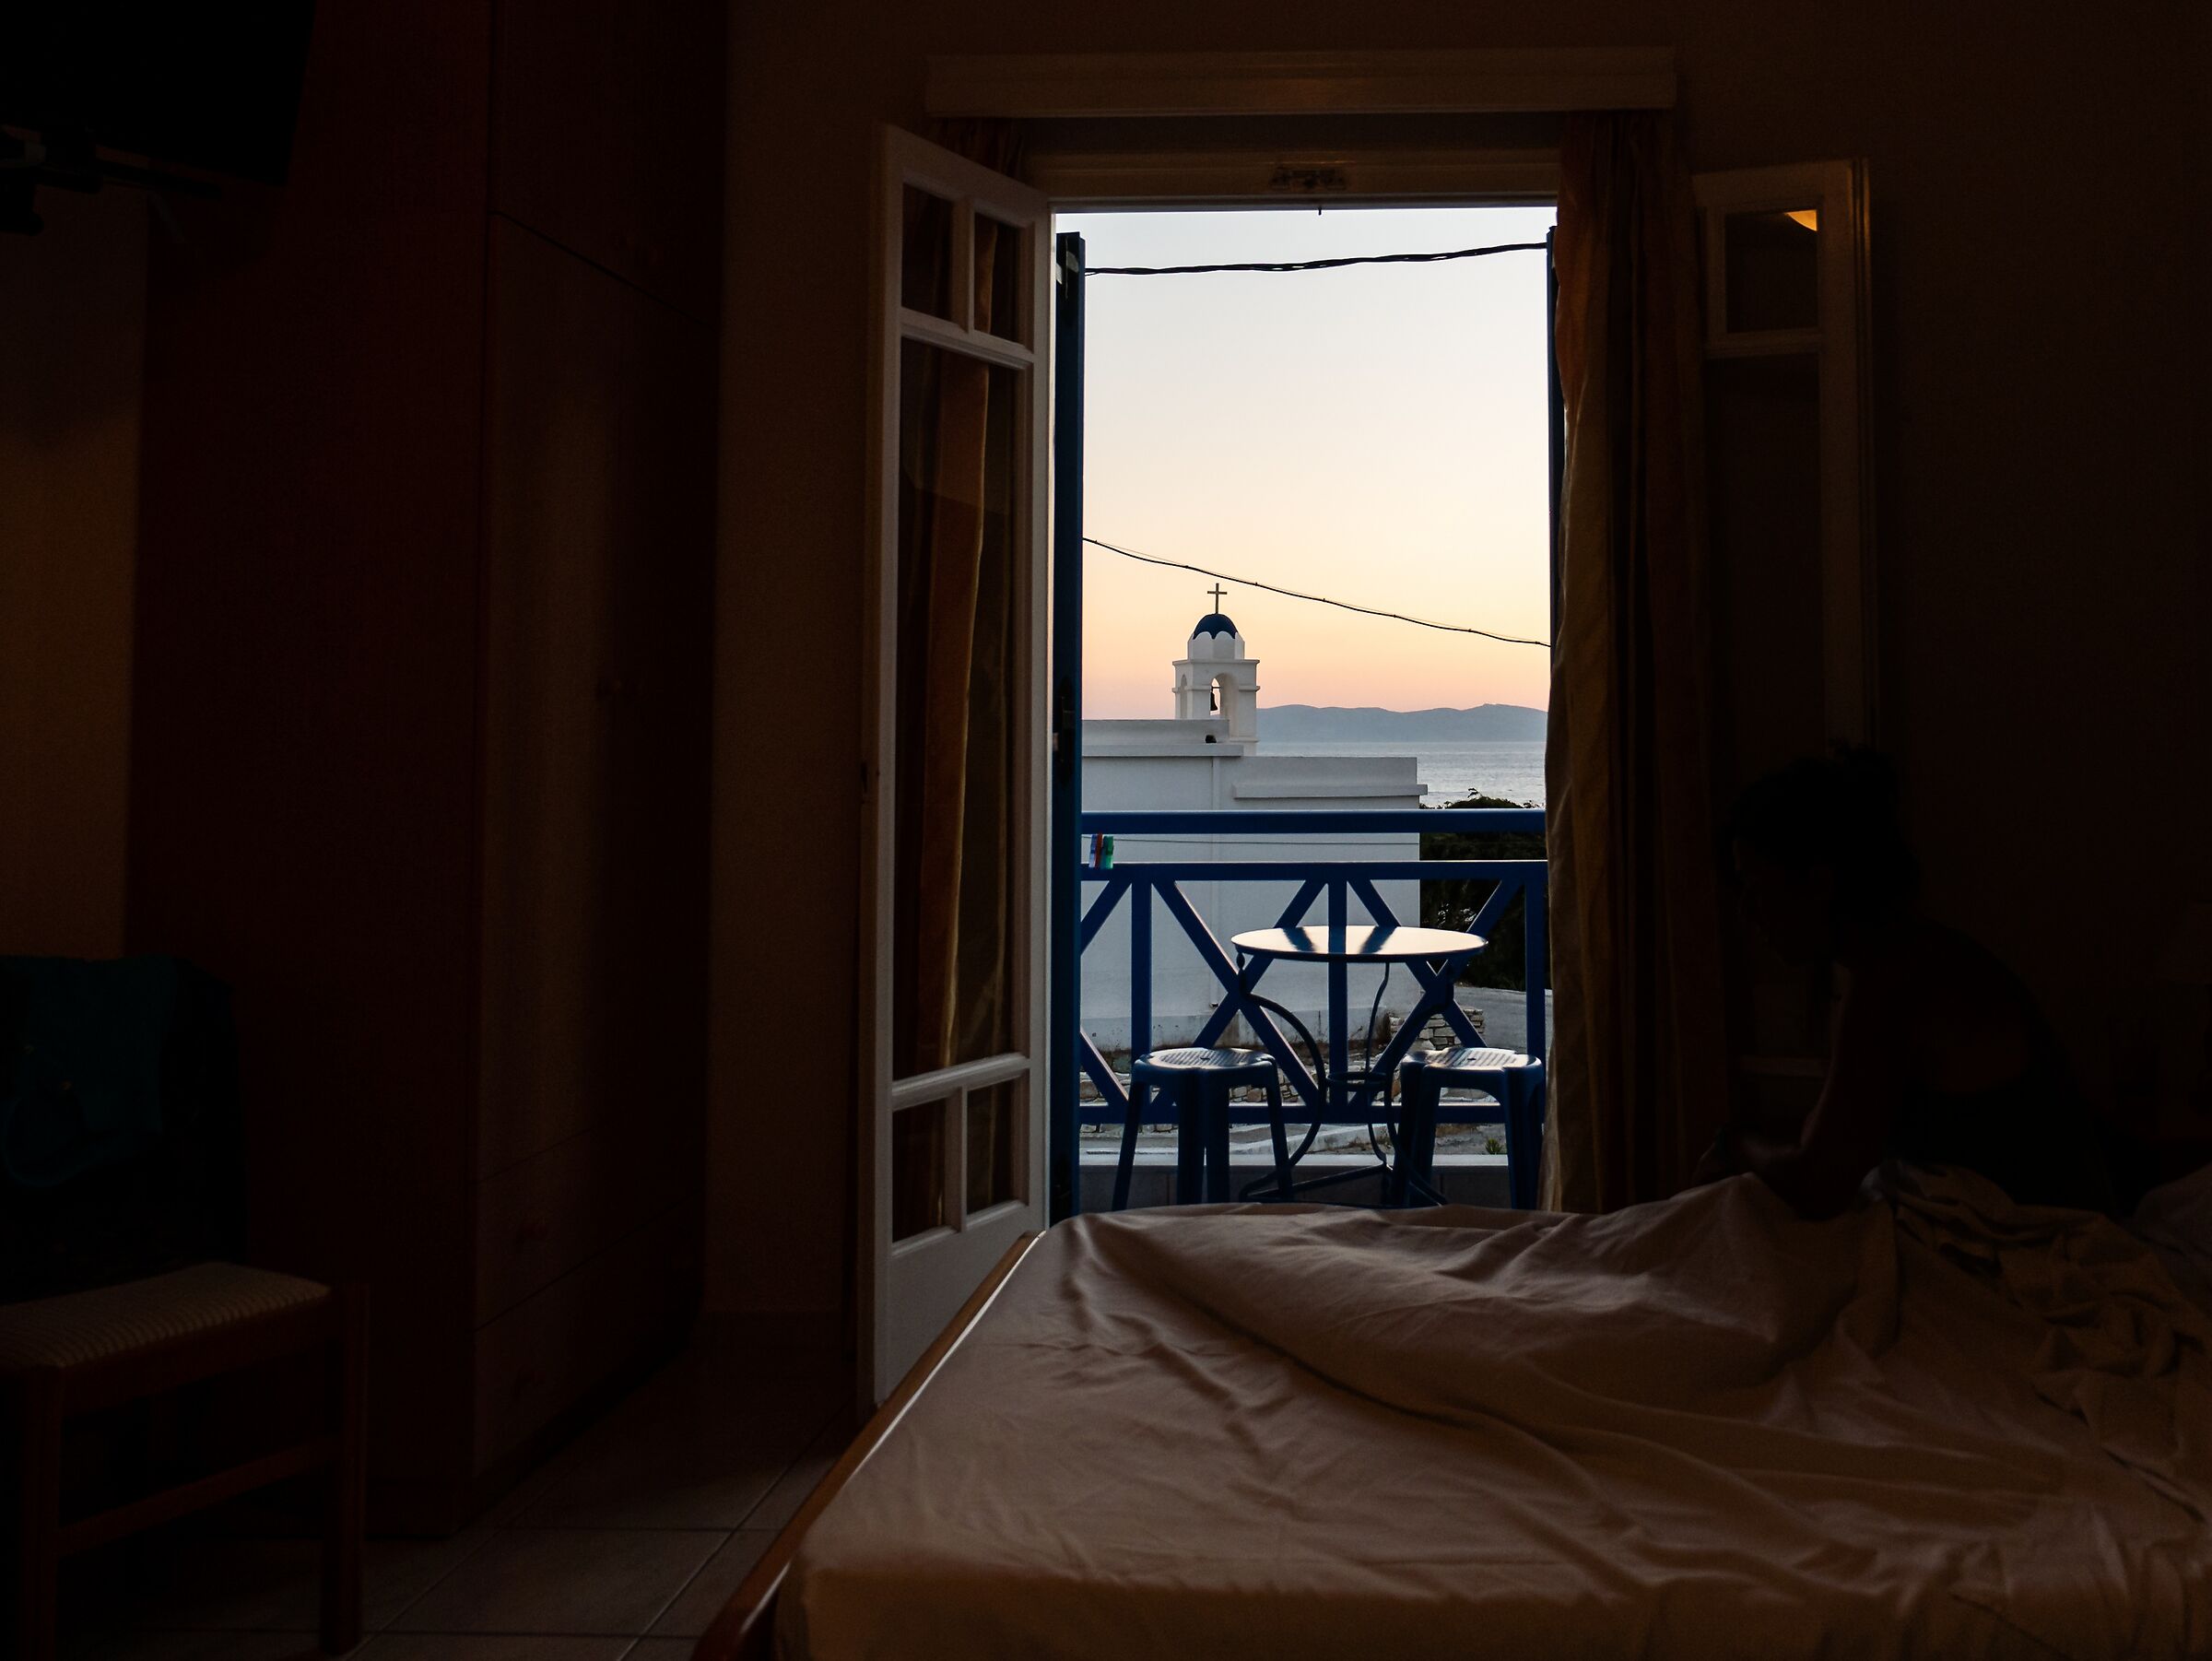 From the window - Tinos Island Greece ...